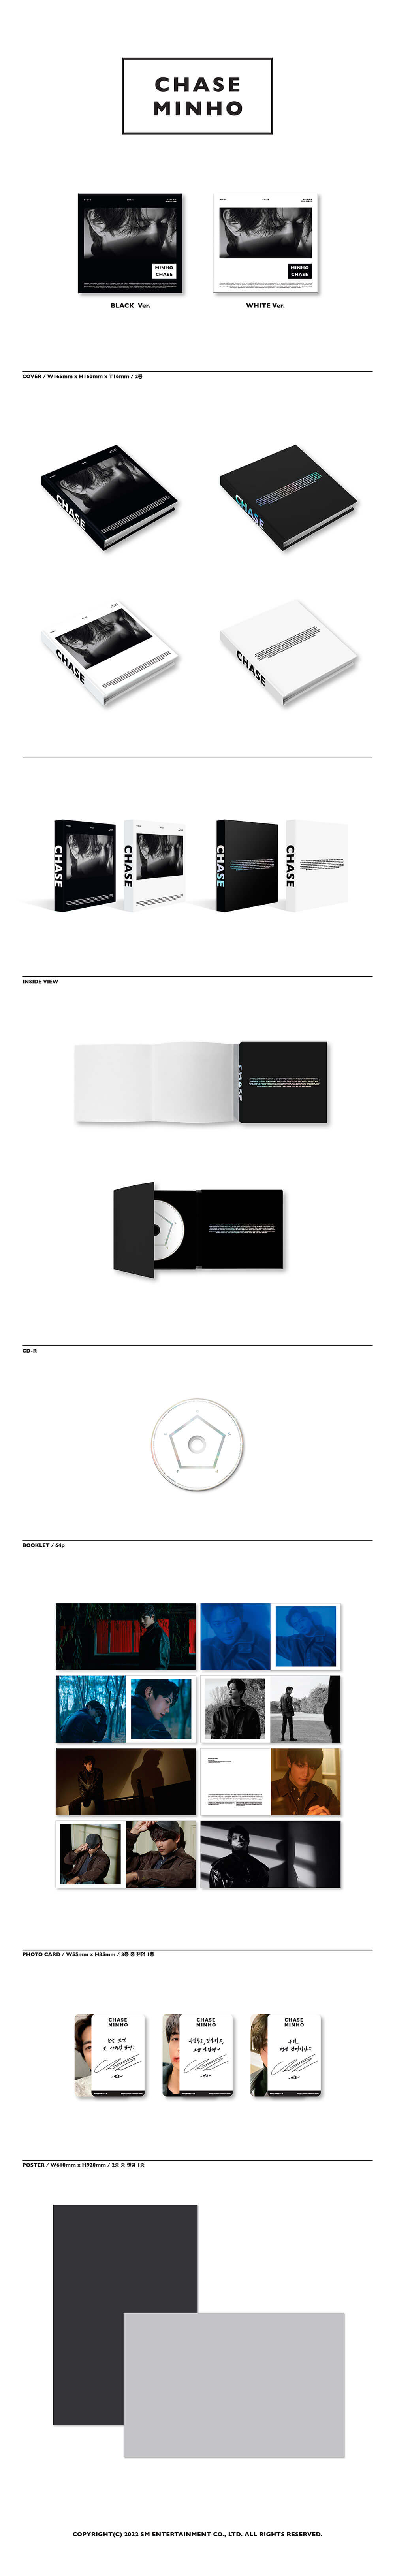 Minho - Chase (primer mini álbum) Complete Ver. | La compañía daebak